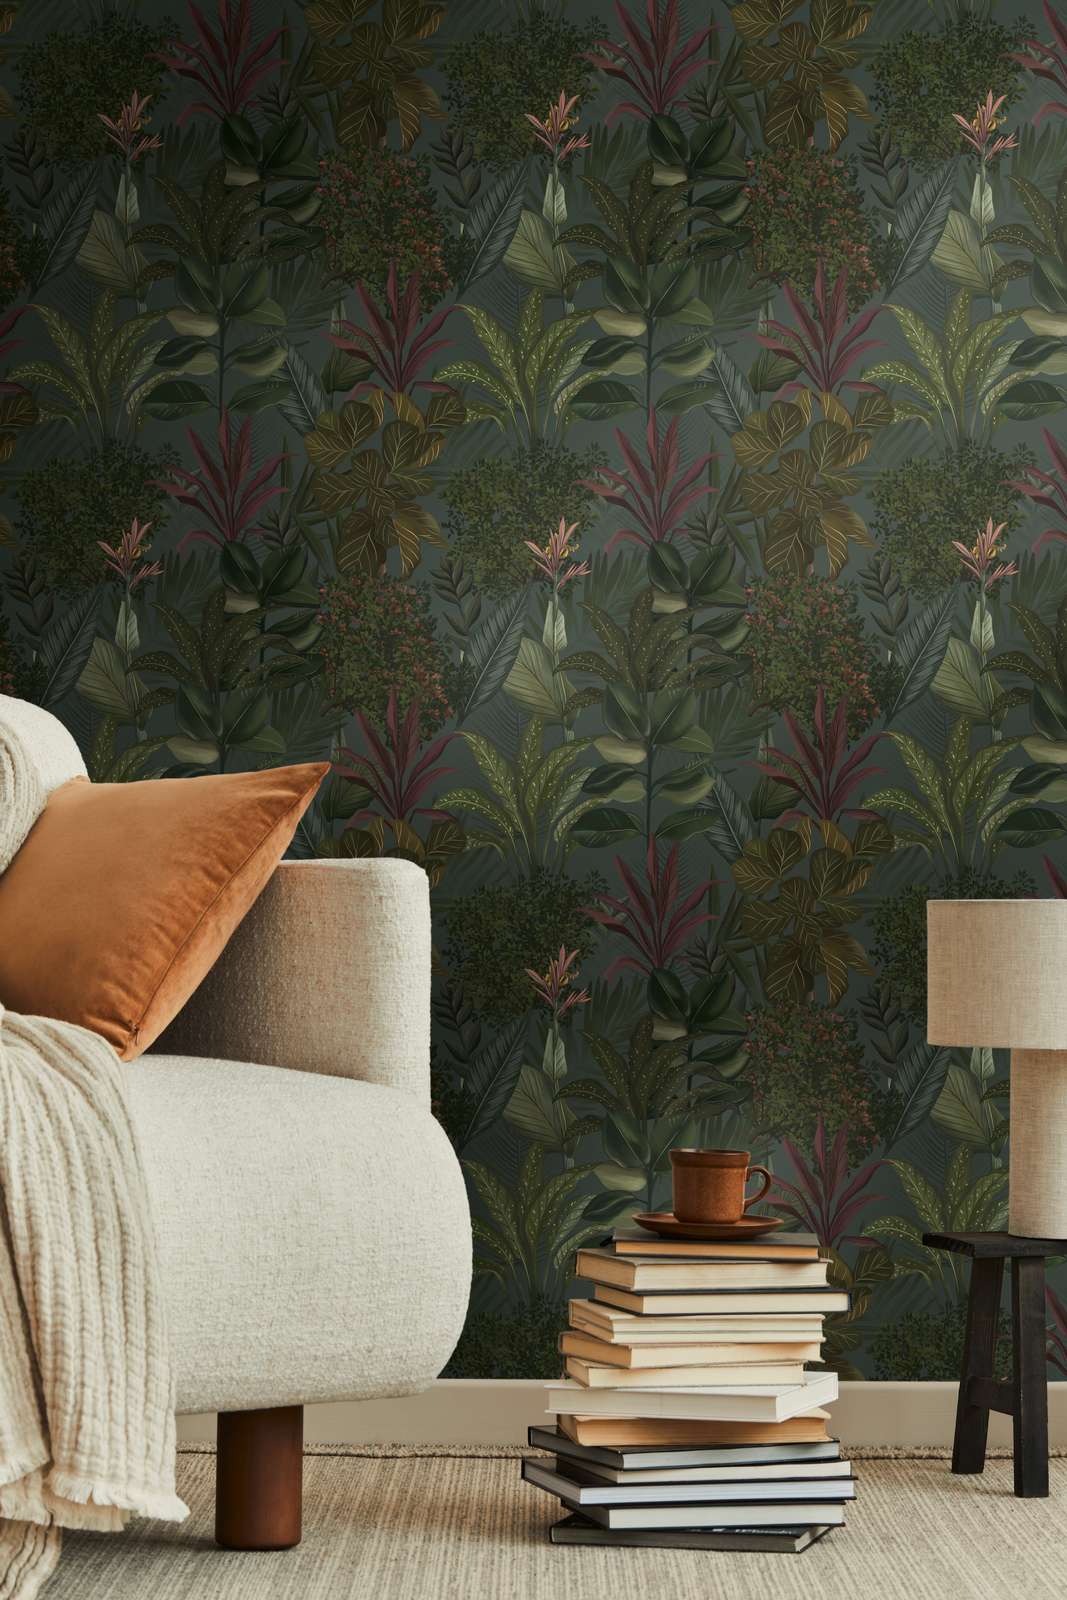             Floral wallpaper modern with leaves & grasses textured matt - dark green, bordeaux
        